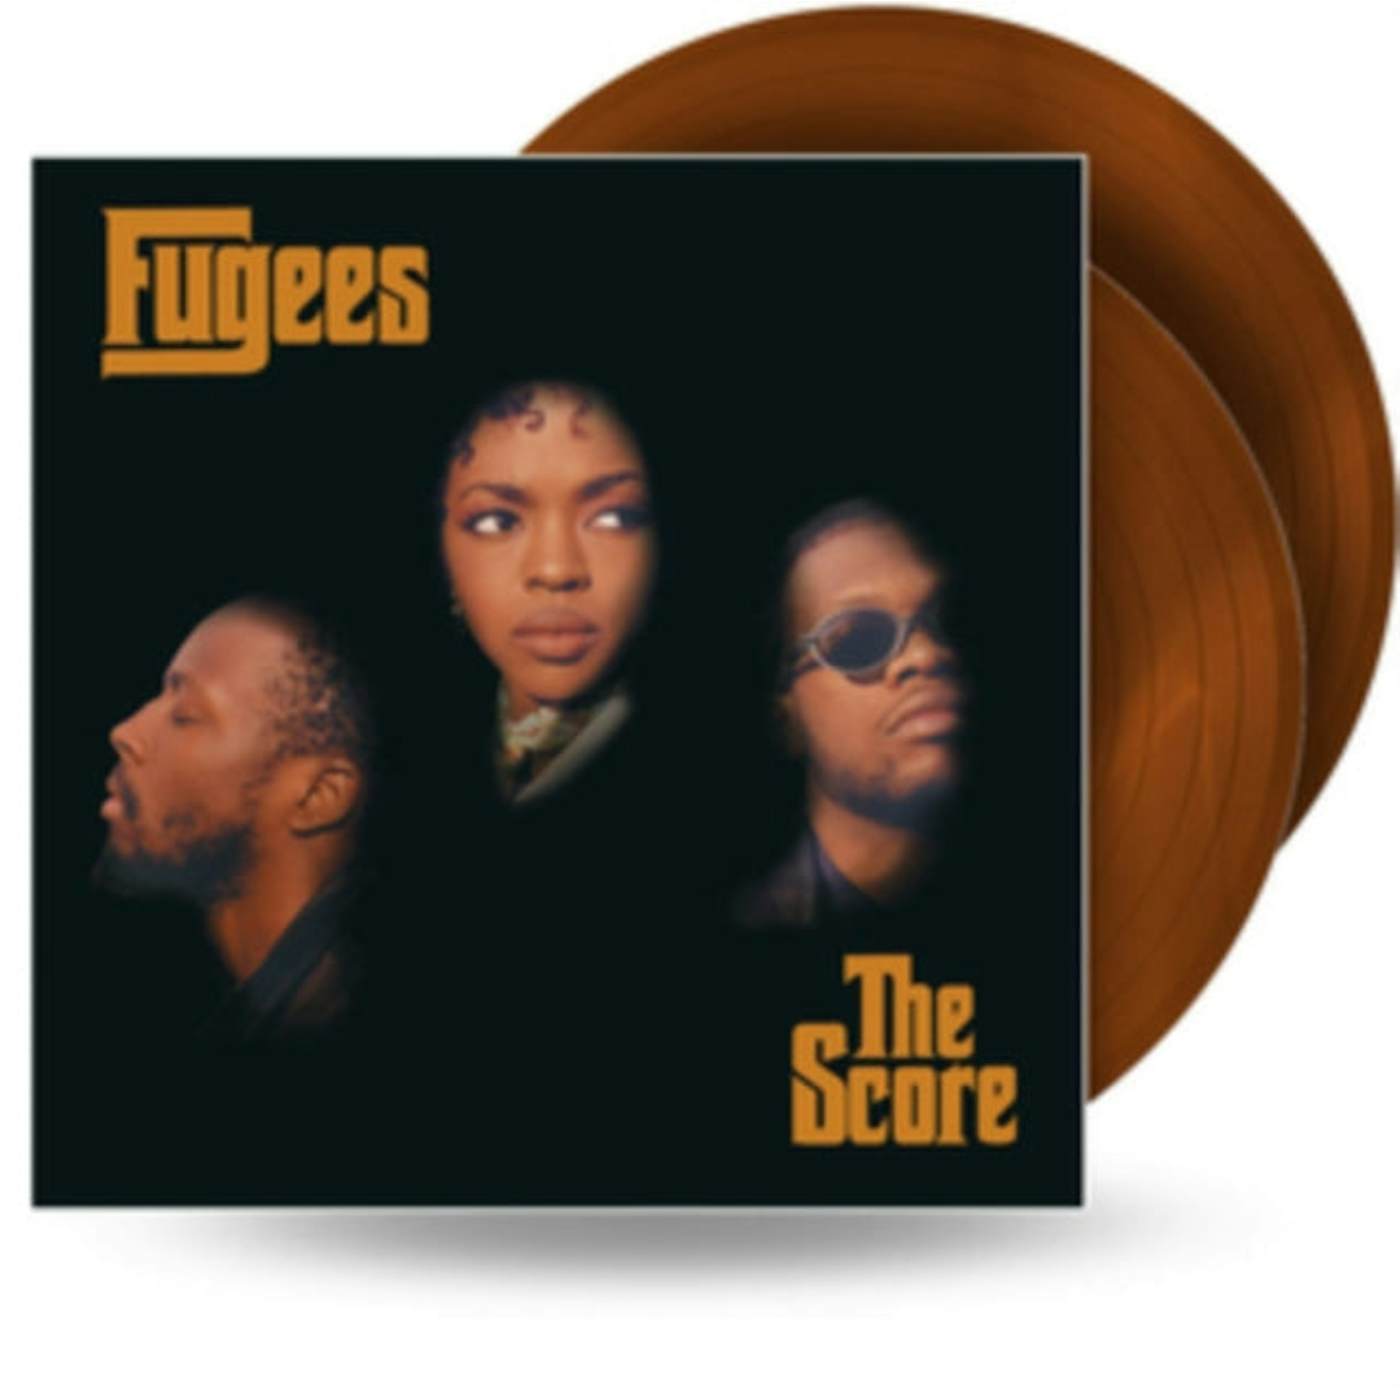 Fugees LP Vinyl Record - The Score